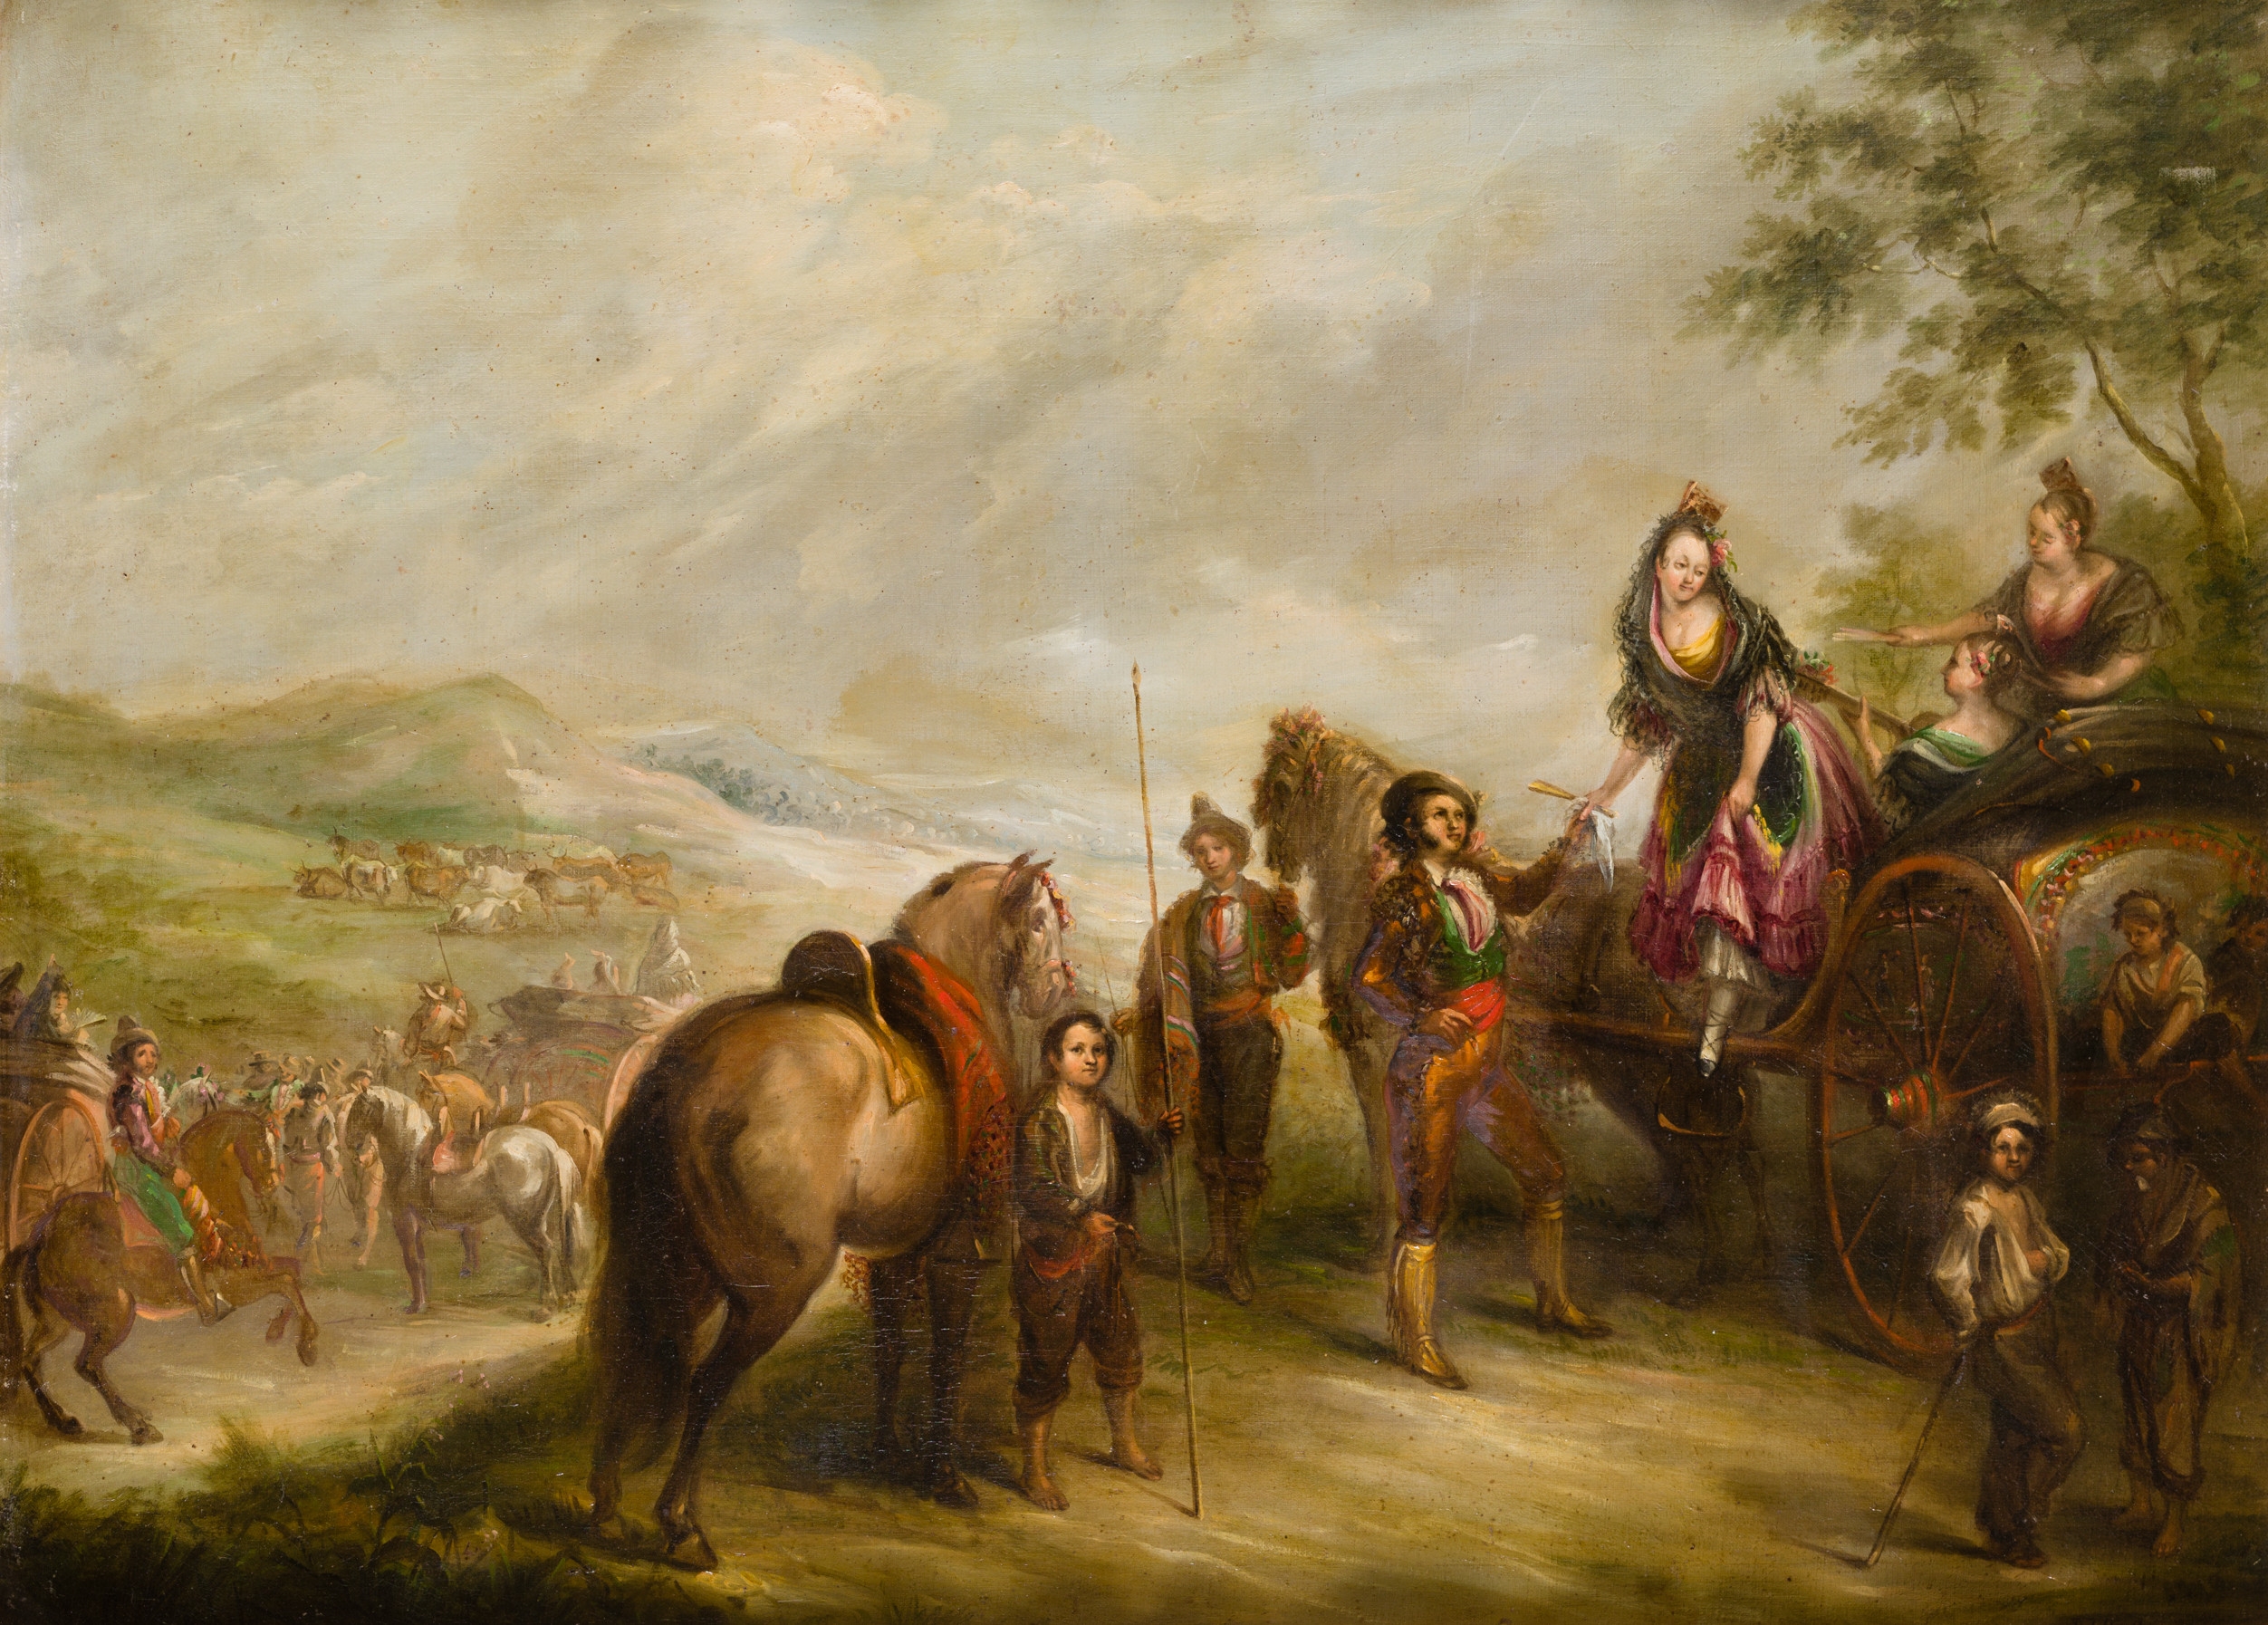 La feria by Eugenio Lucas y Velázquez